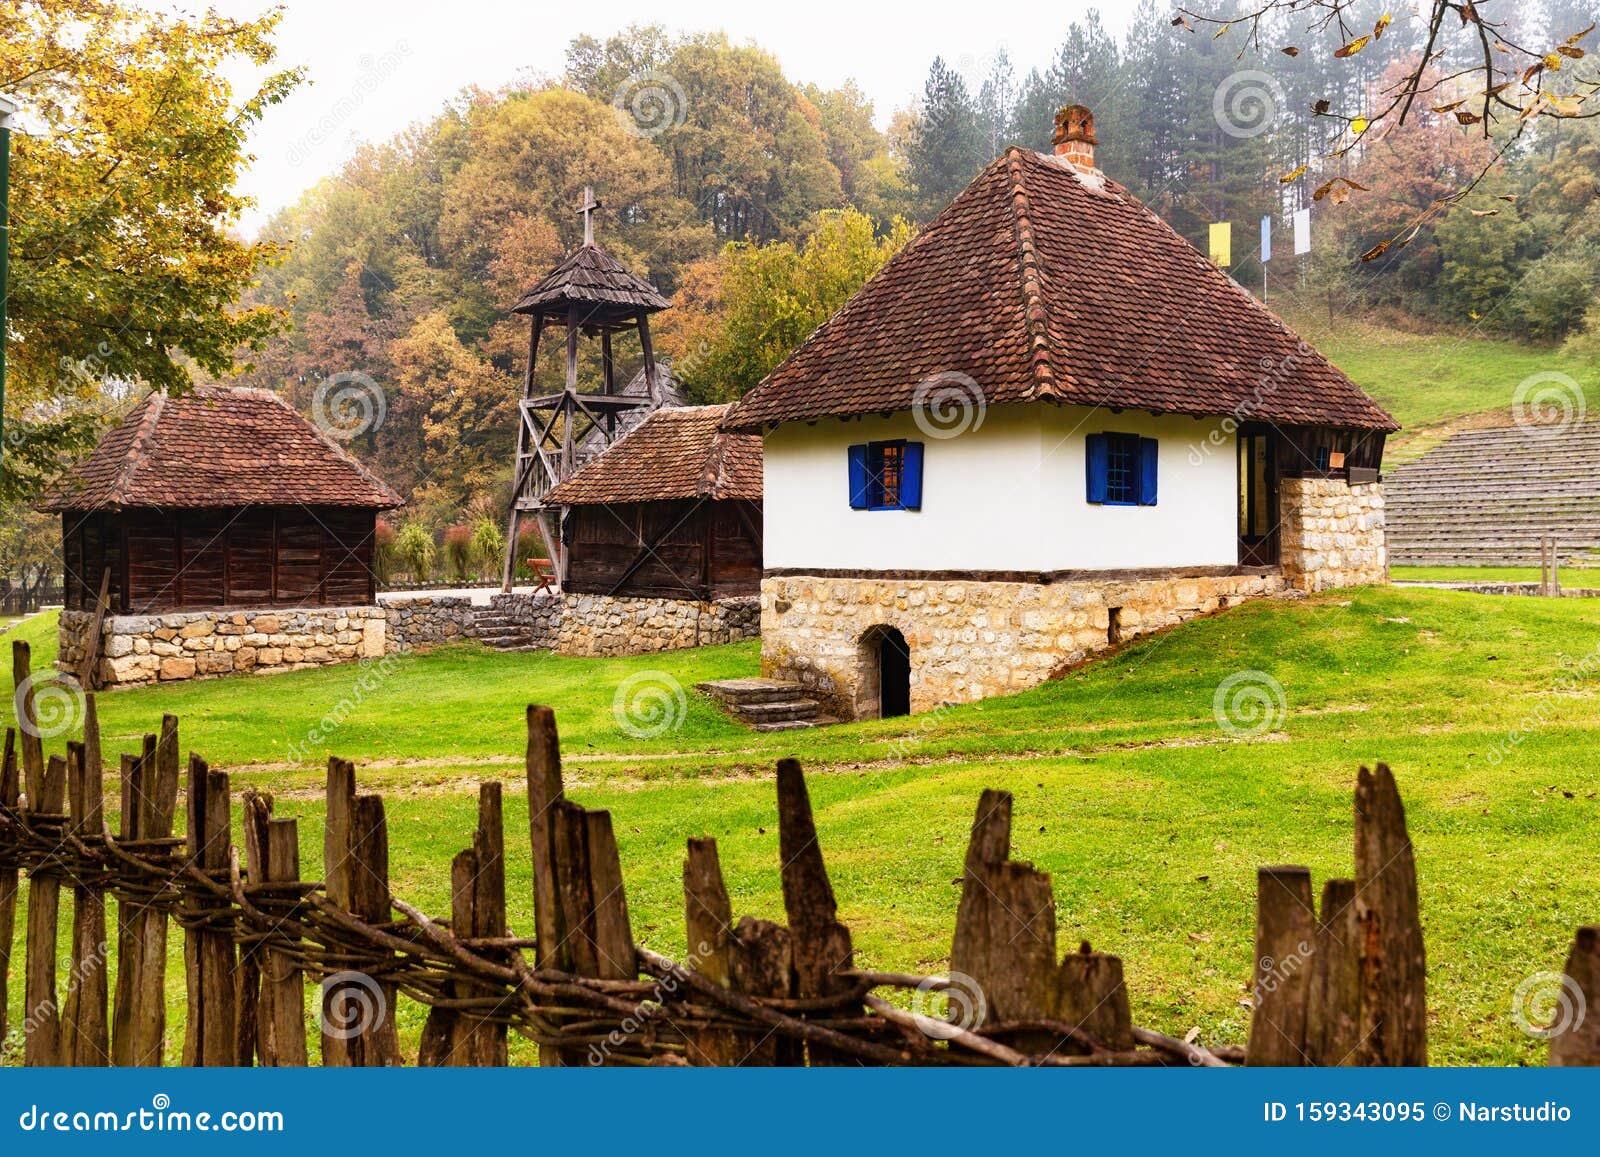 European Medieval Village Houses. Stock Image - Image of buildings